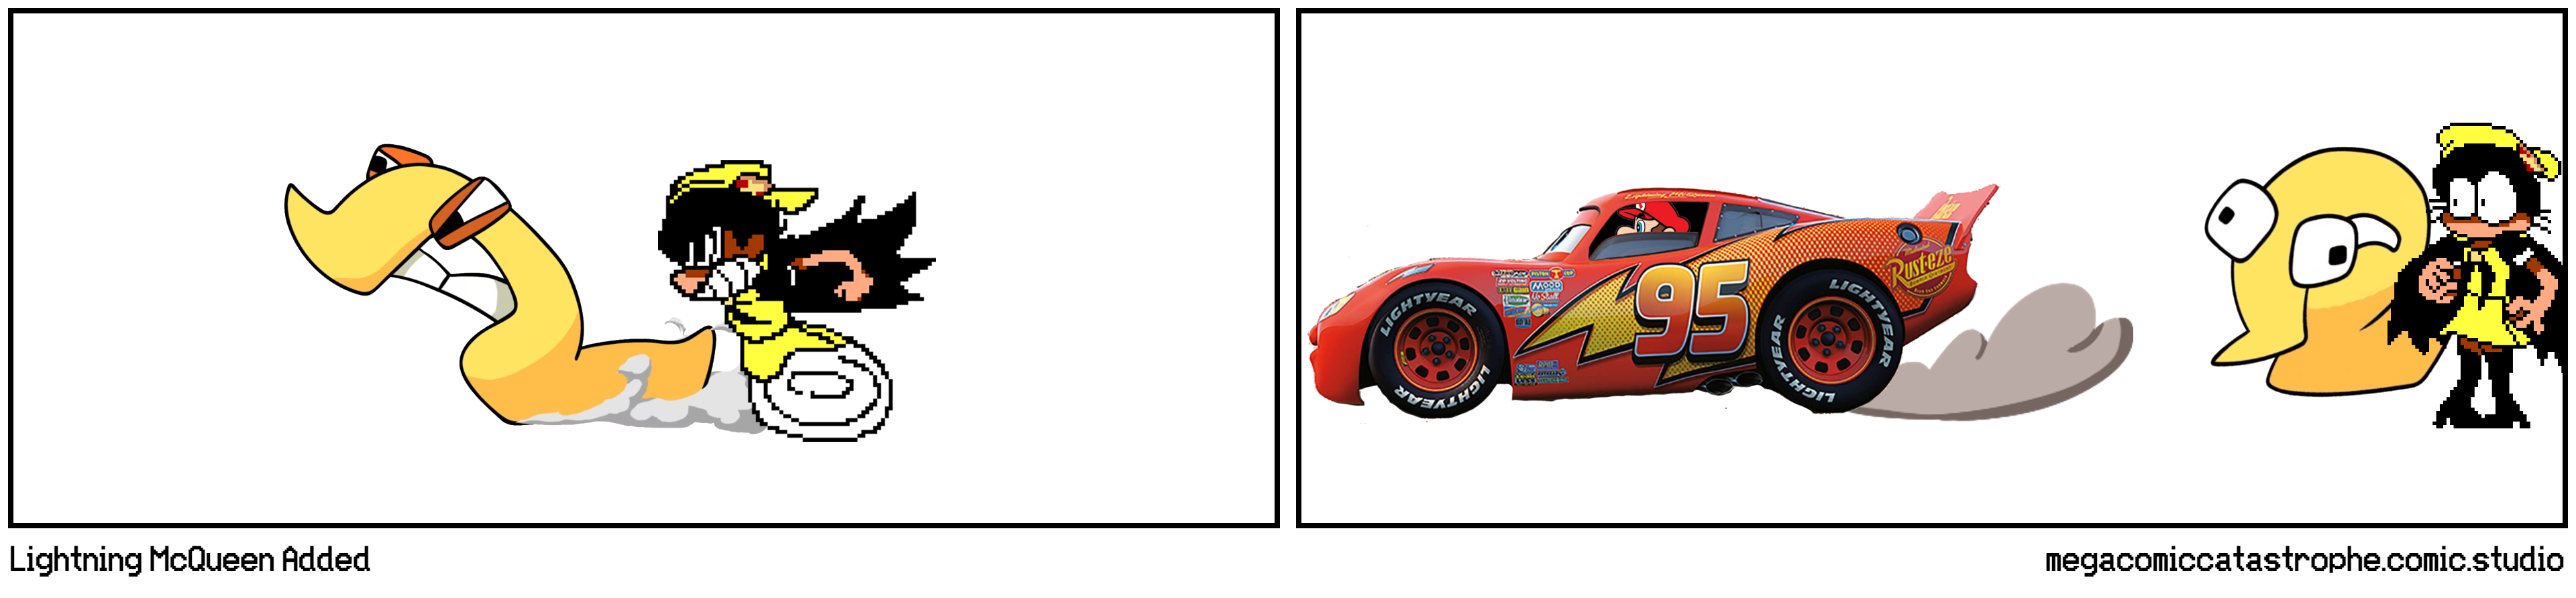 Lightning McQueen Added